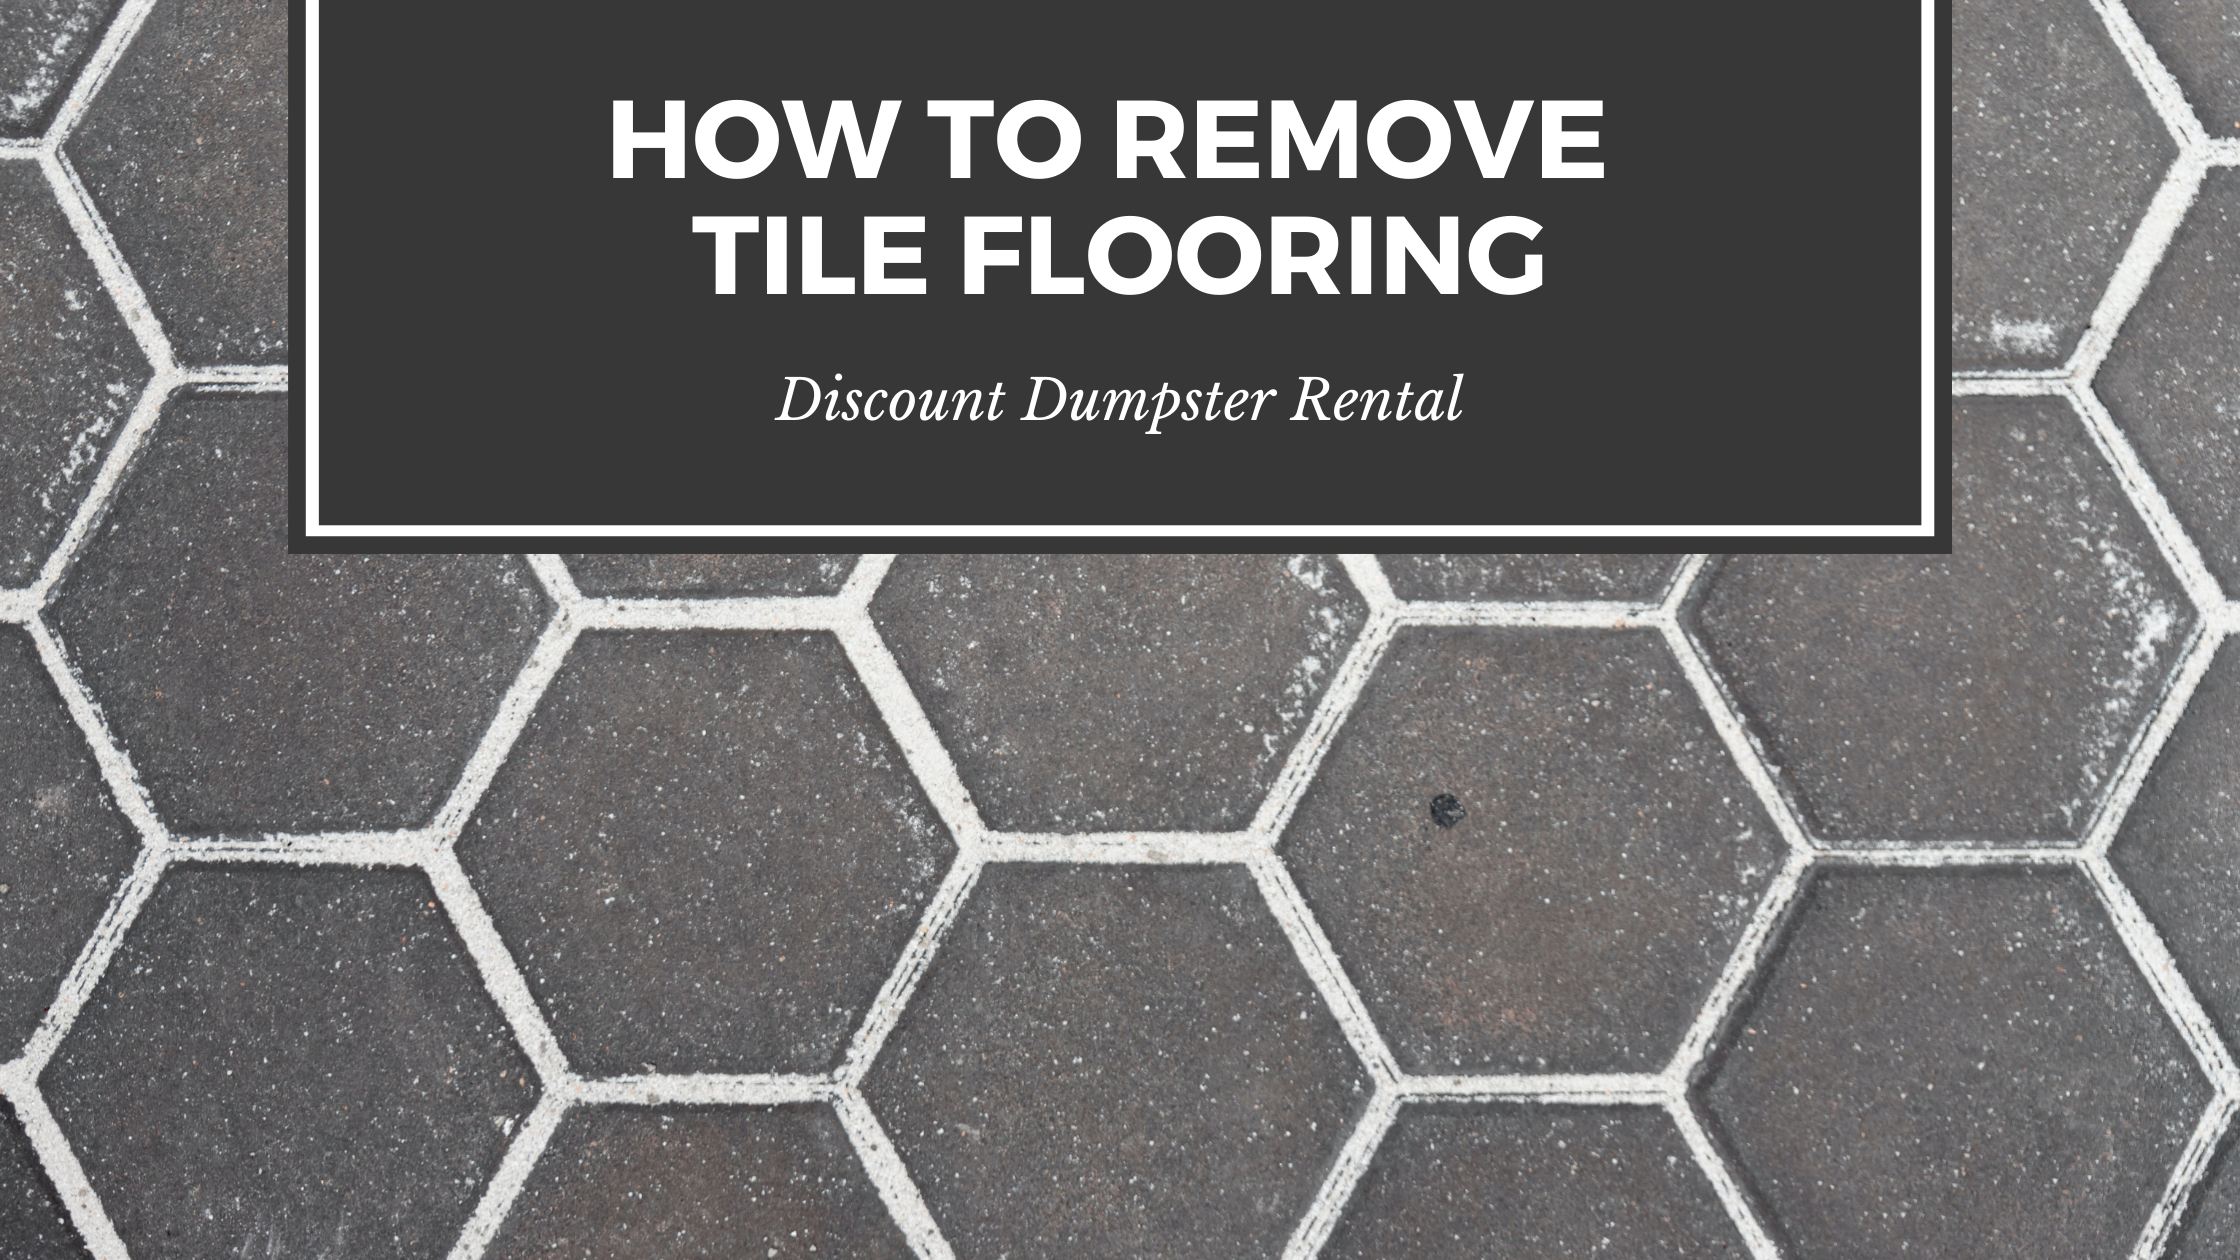 https://discountdumpsterco.com/wp-content/uploads/How-to-Remove-Tile-Flooring-blog-banner.png